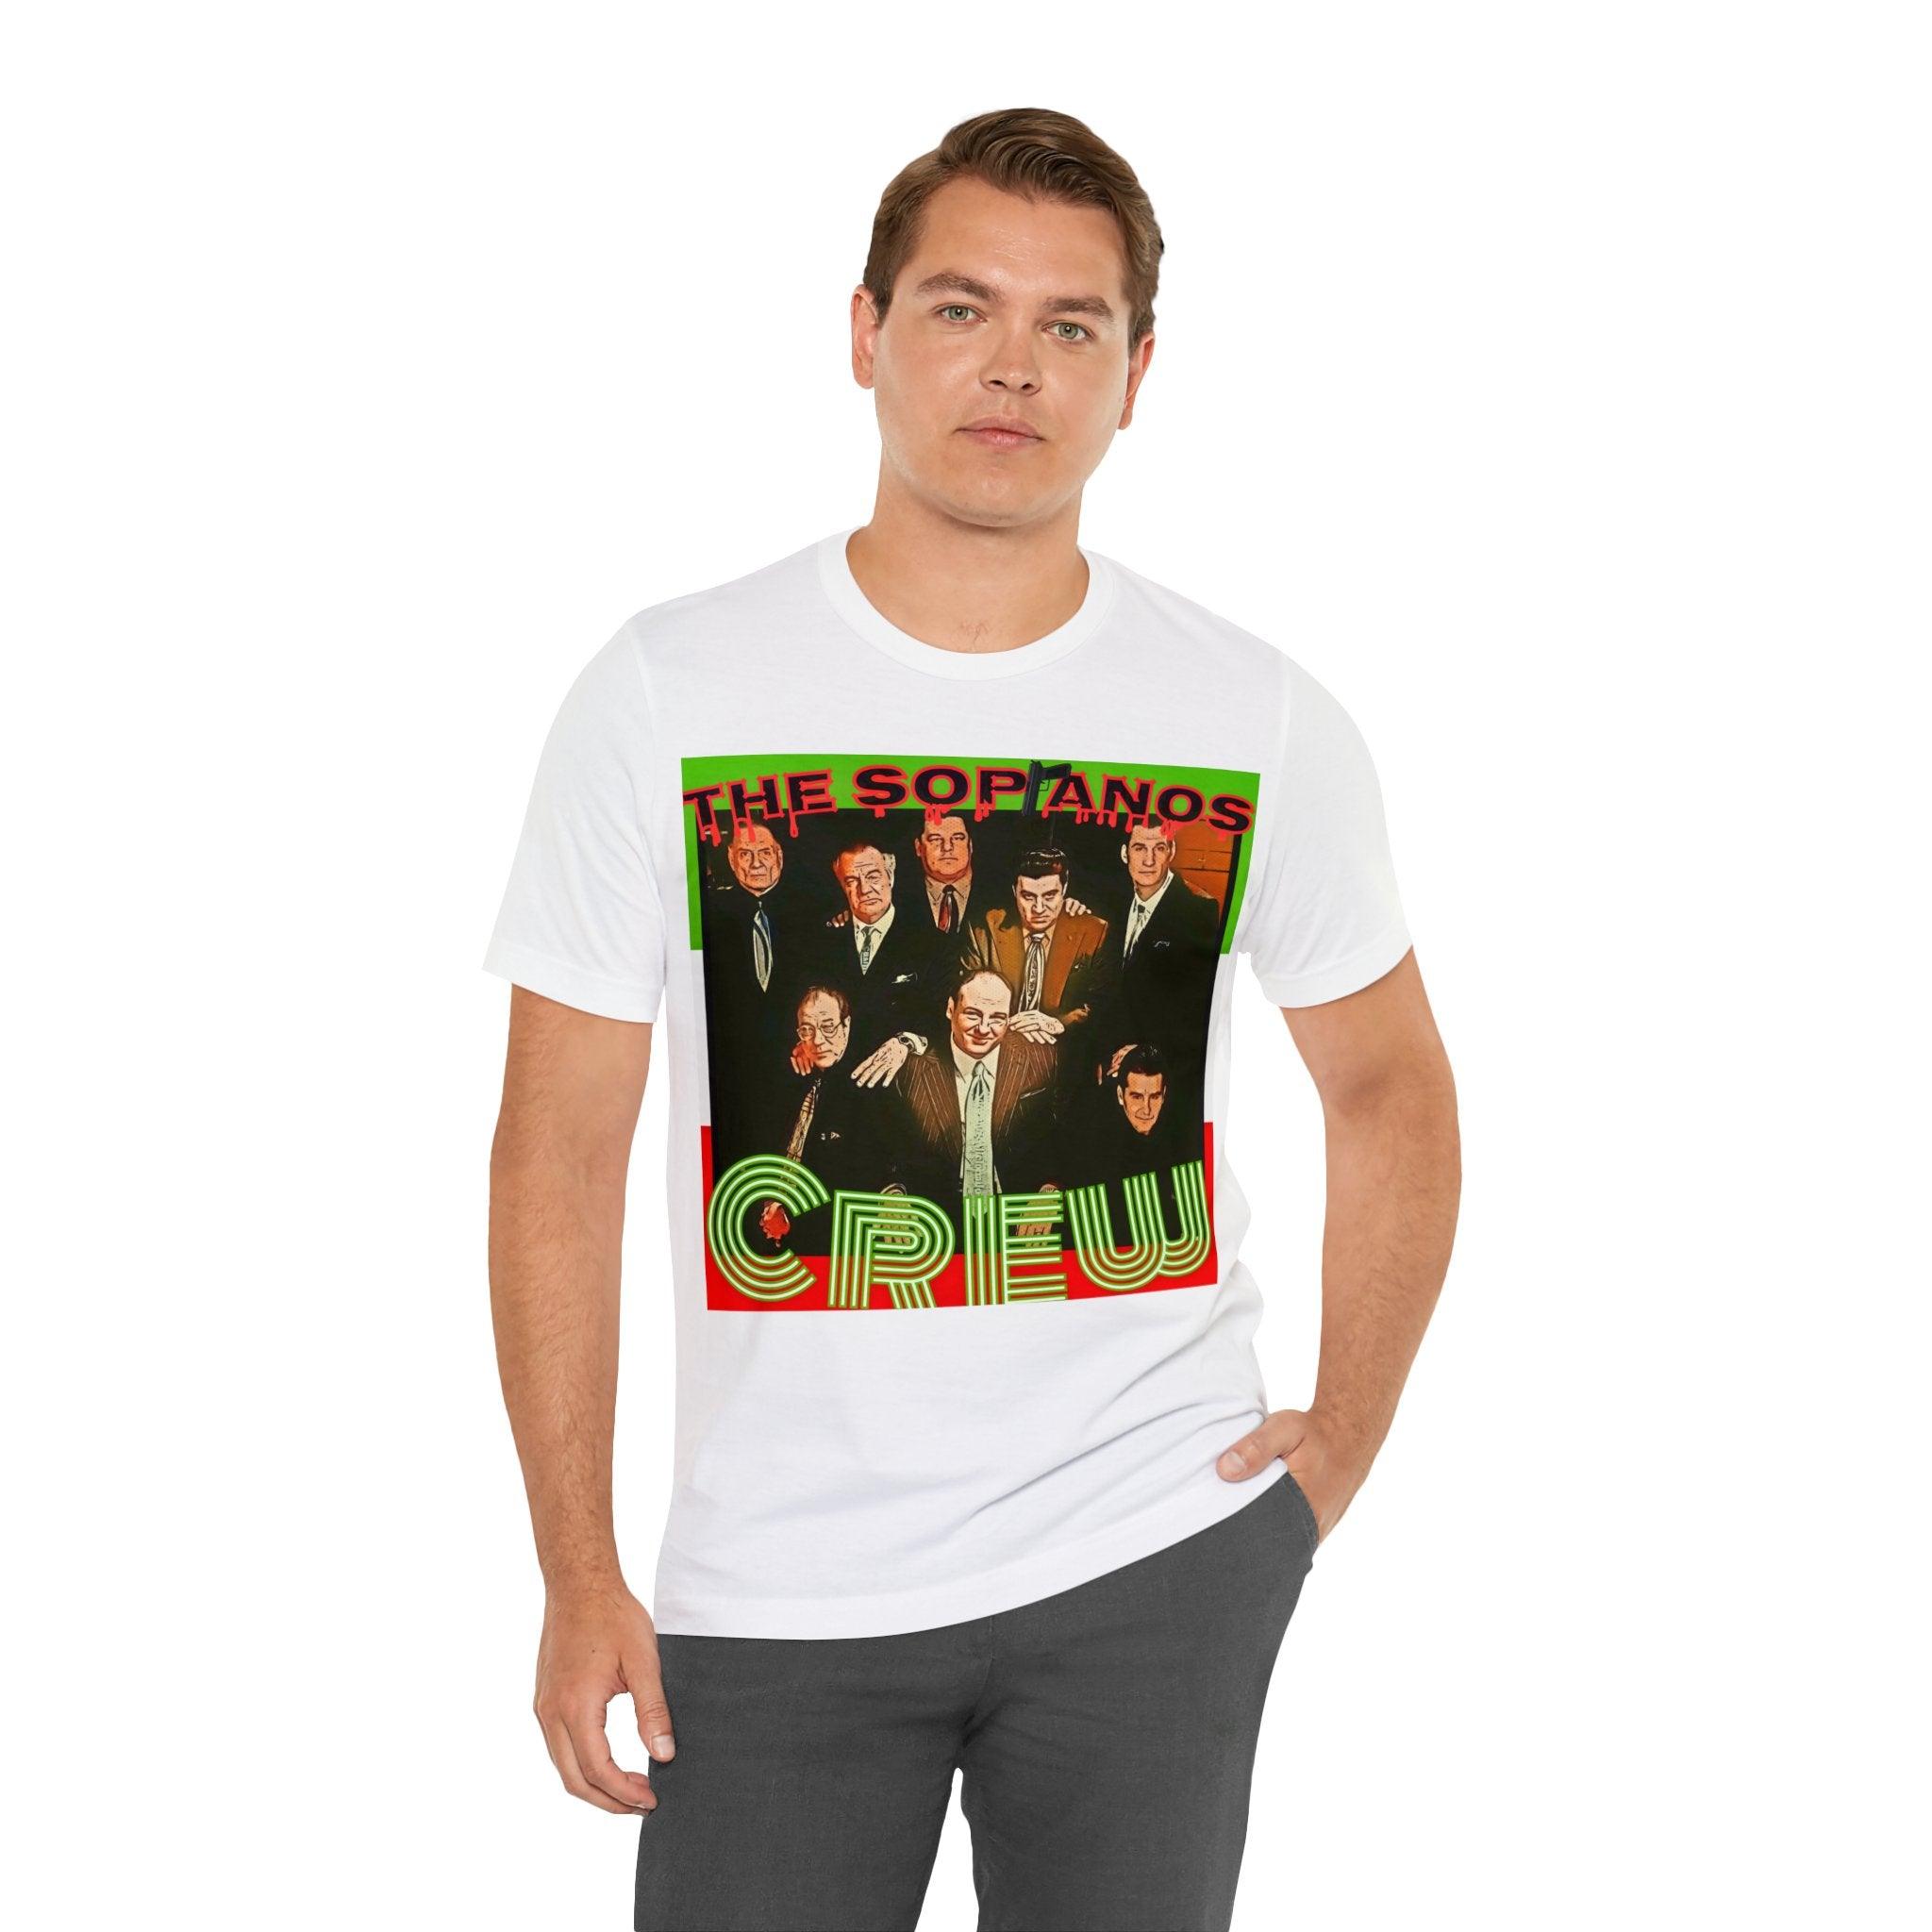 Sopranos Crew T-Shirt - Epic Shirts 403